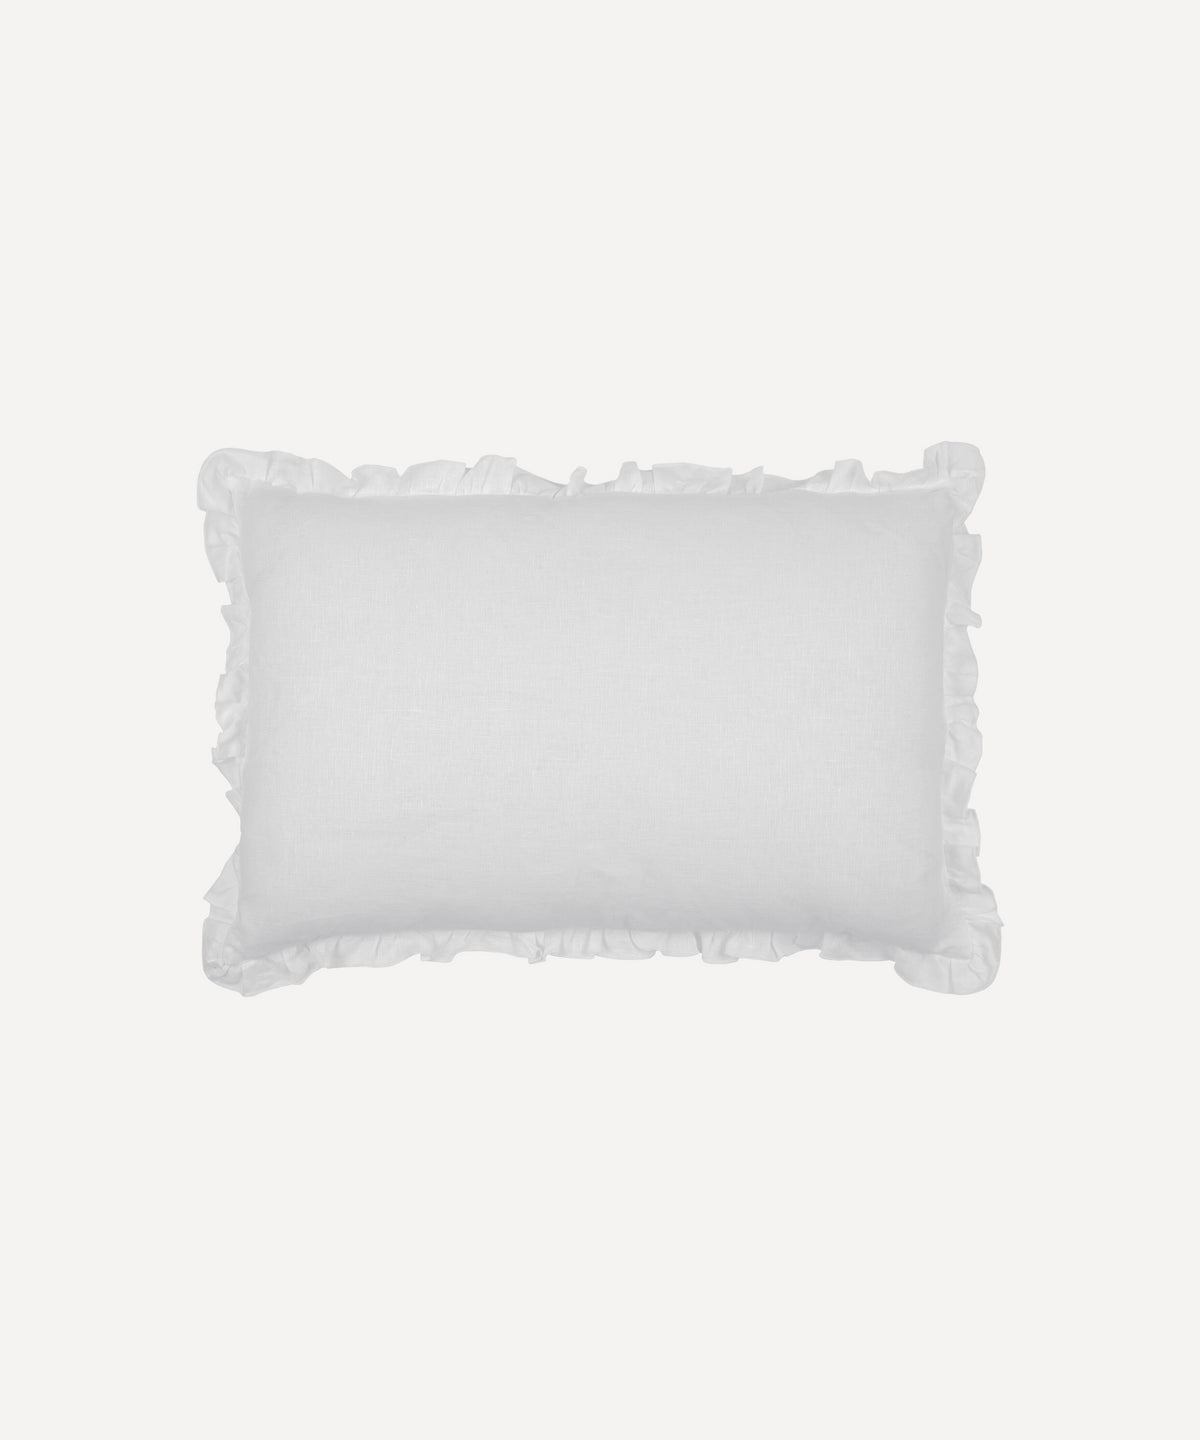 Ruffle Linen Cushion Cover in White